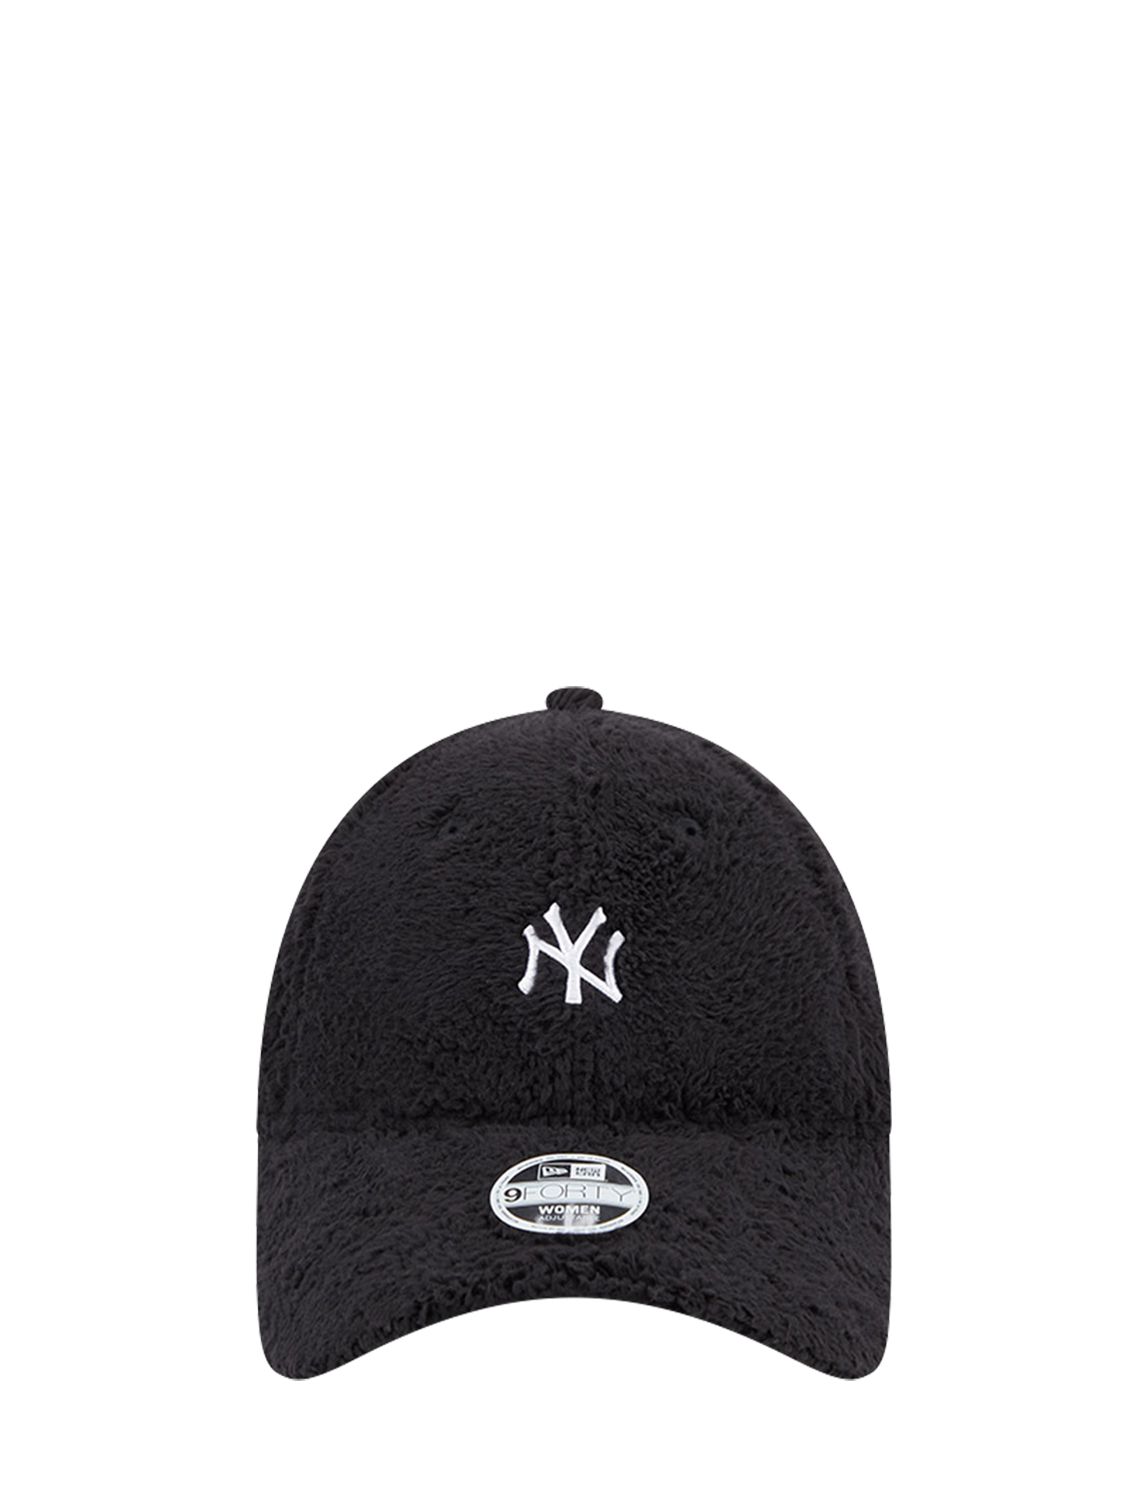 Teddy 9forty New York Yankees Cap